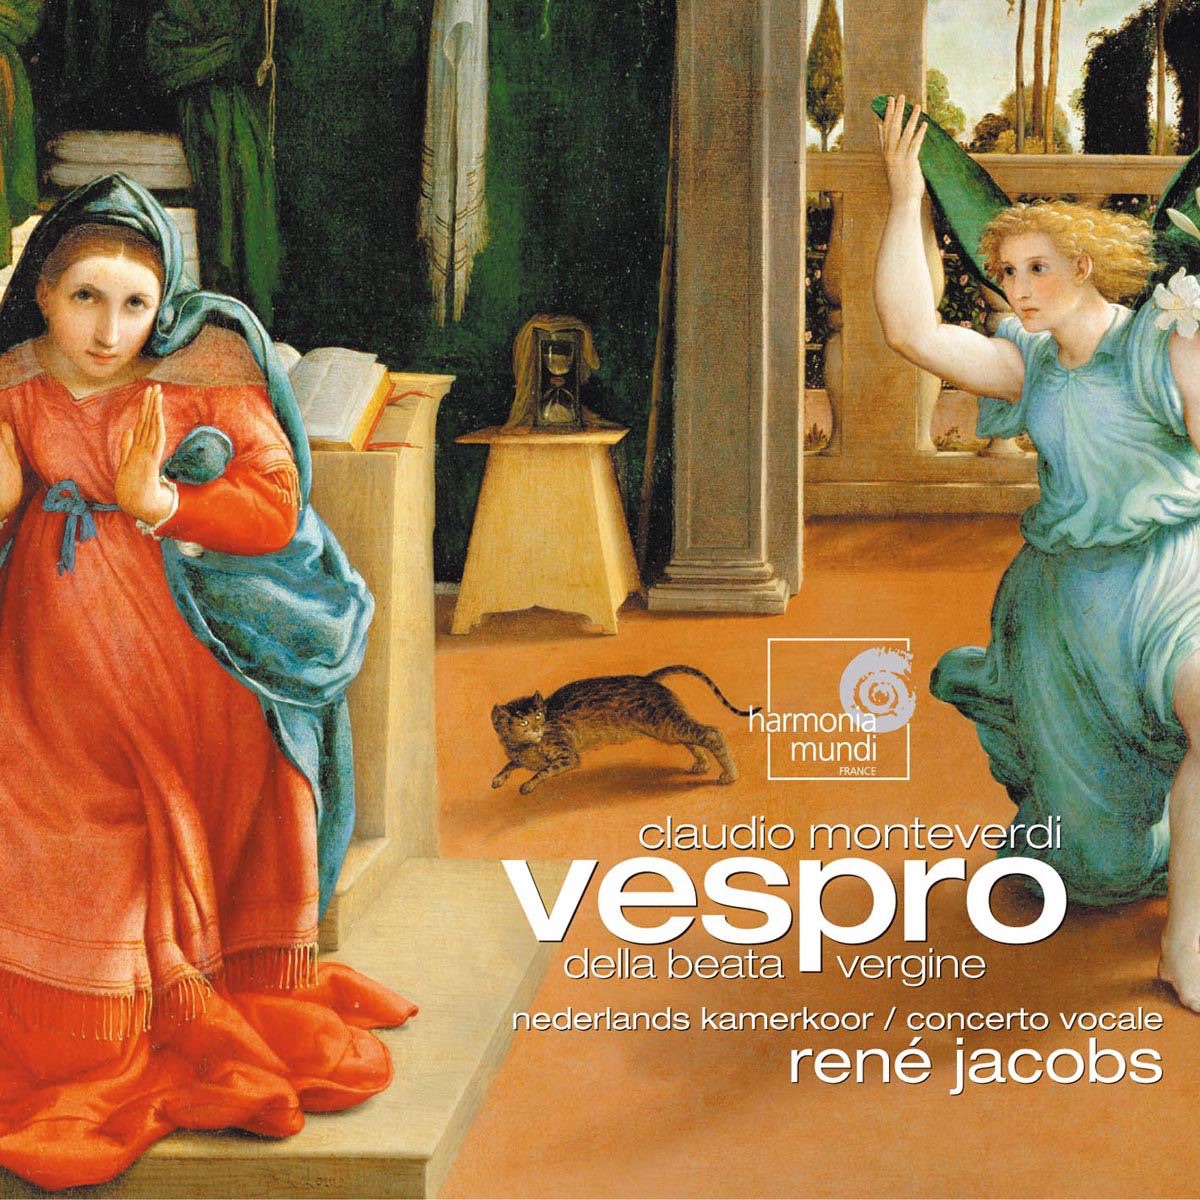 Monteverdi: Vespro della beata vergine by Concerto Vocale, René Jacobs, Netherlands Chamber Choir, Nederlands Kamerkoor, Claudio Monteverdi